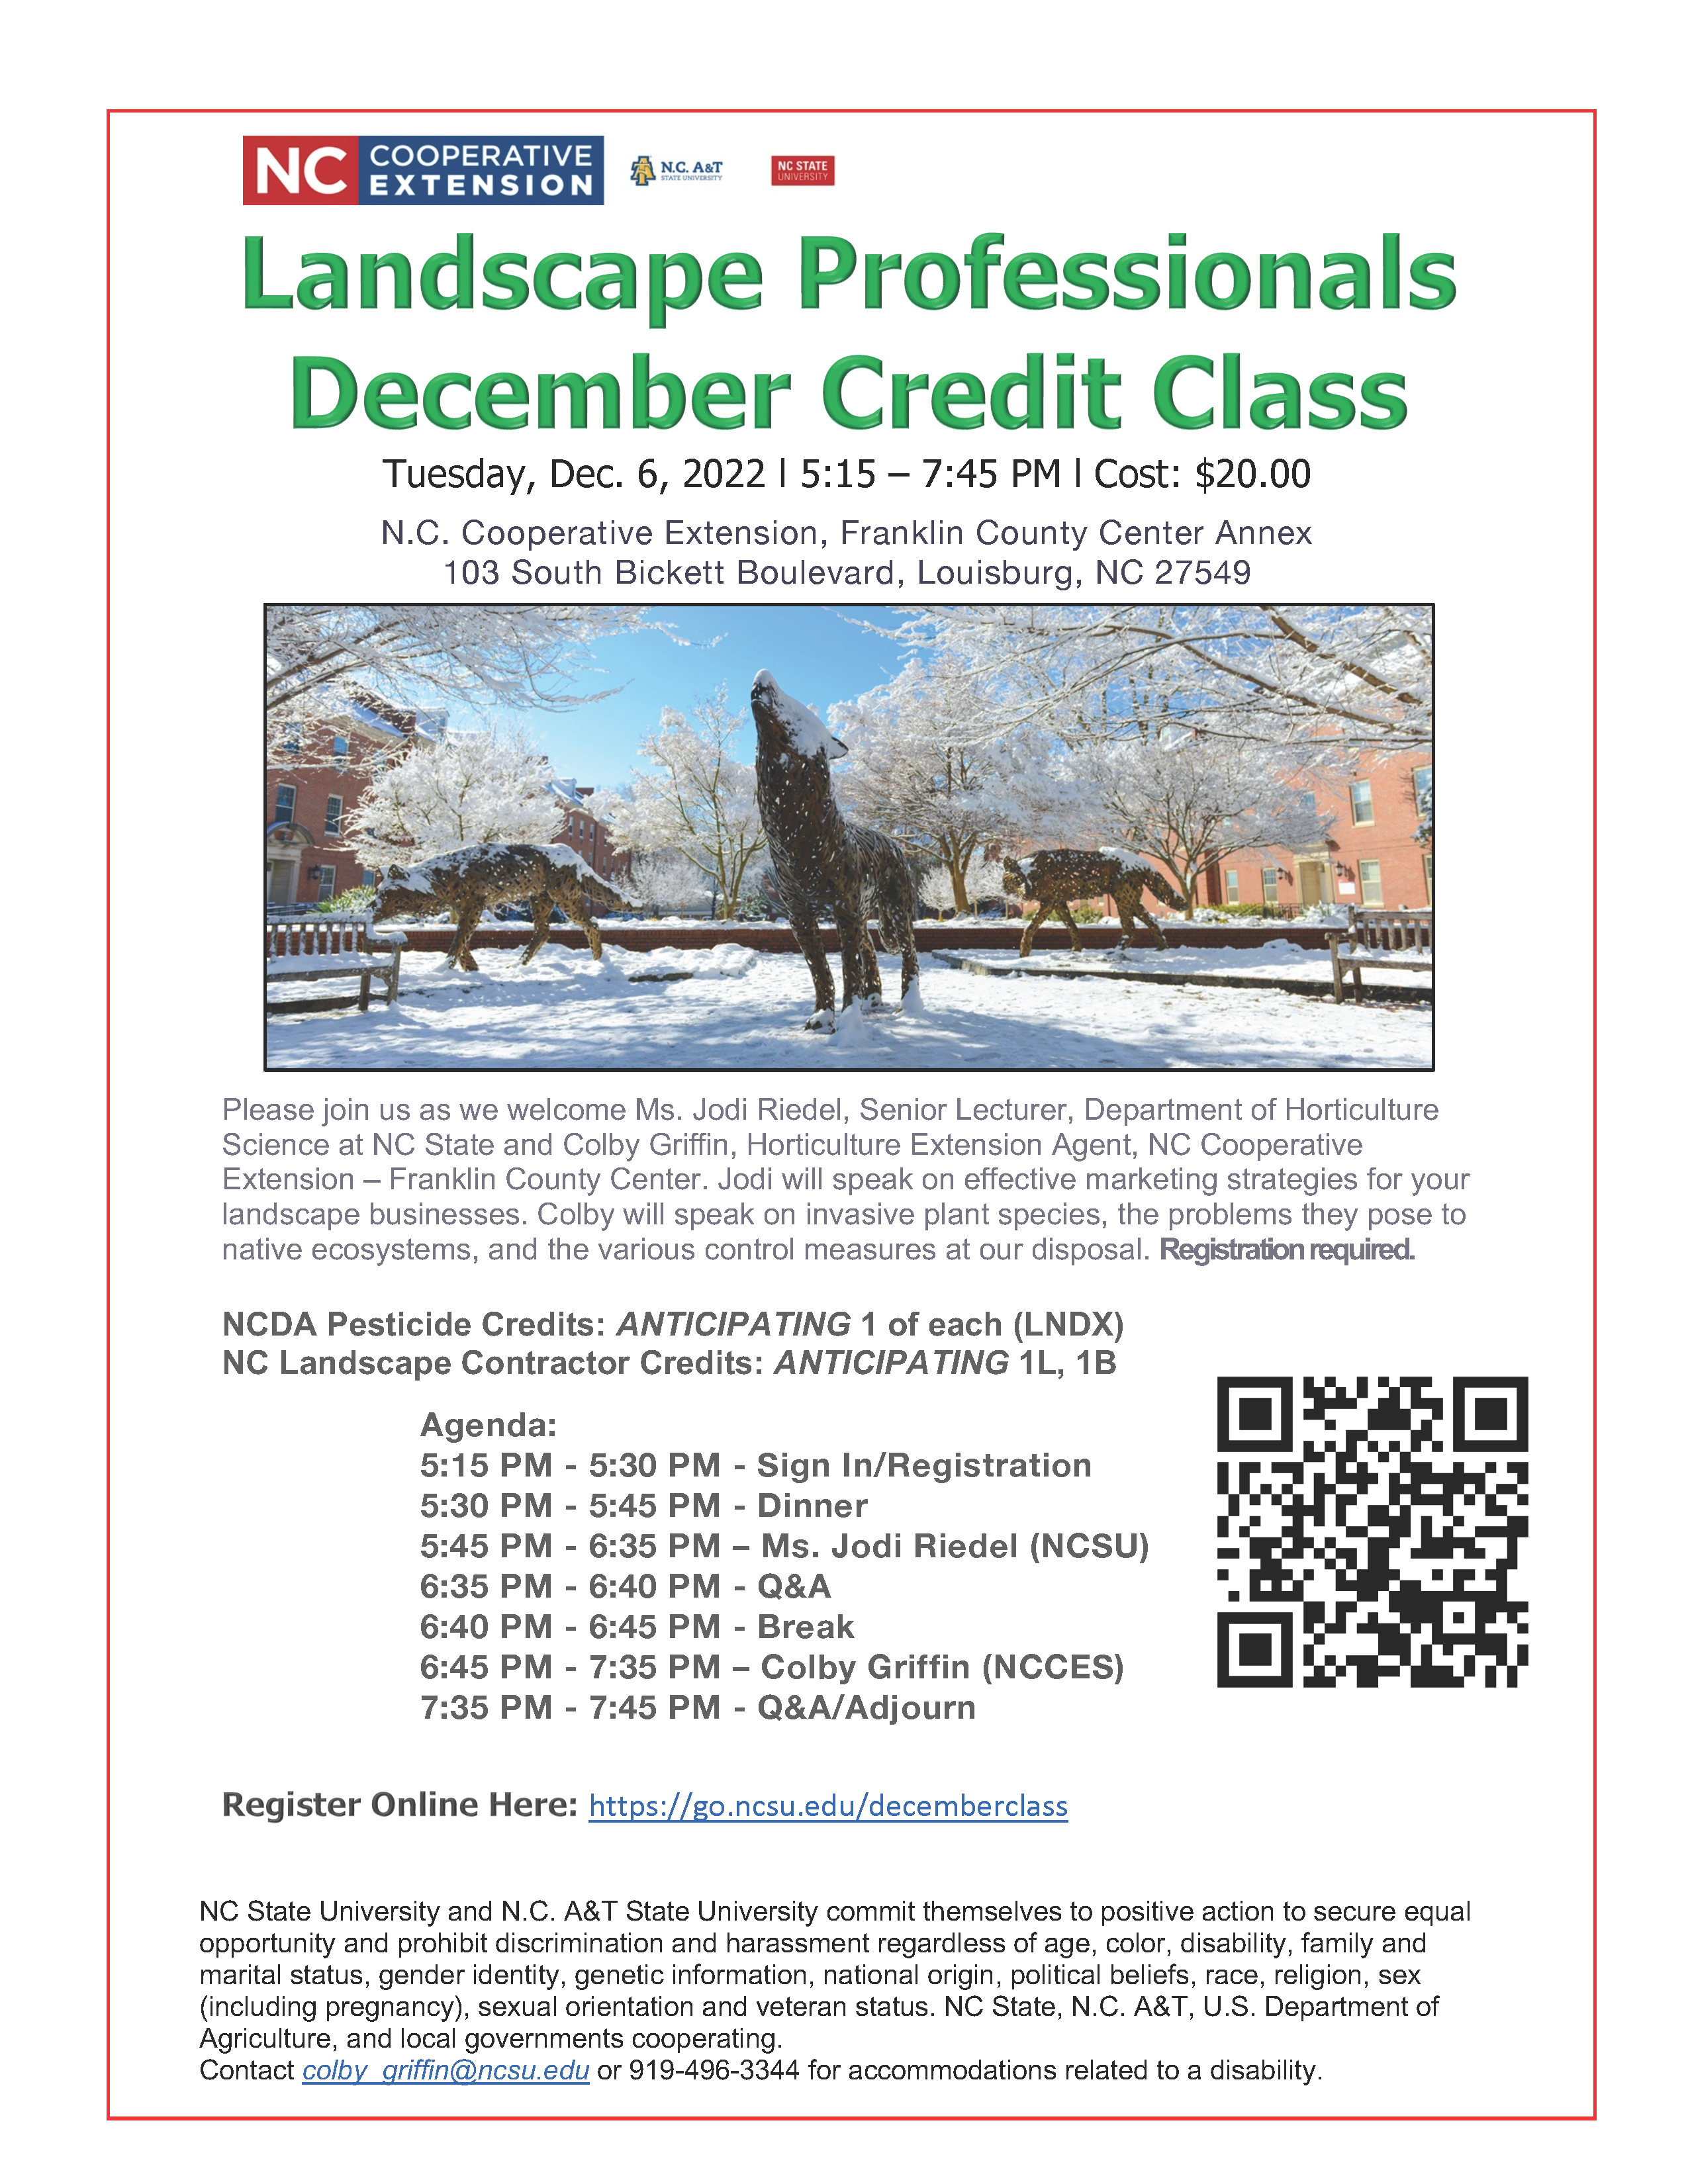 2022 Landscape Professionals December Credit Class flyer, dates, topics, registration info.